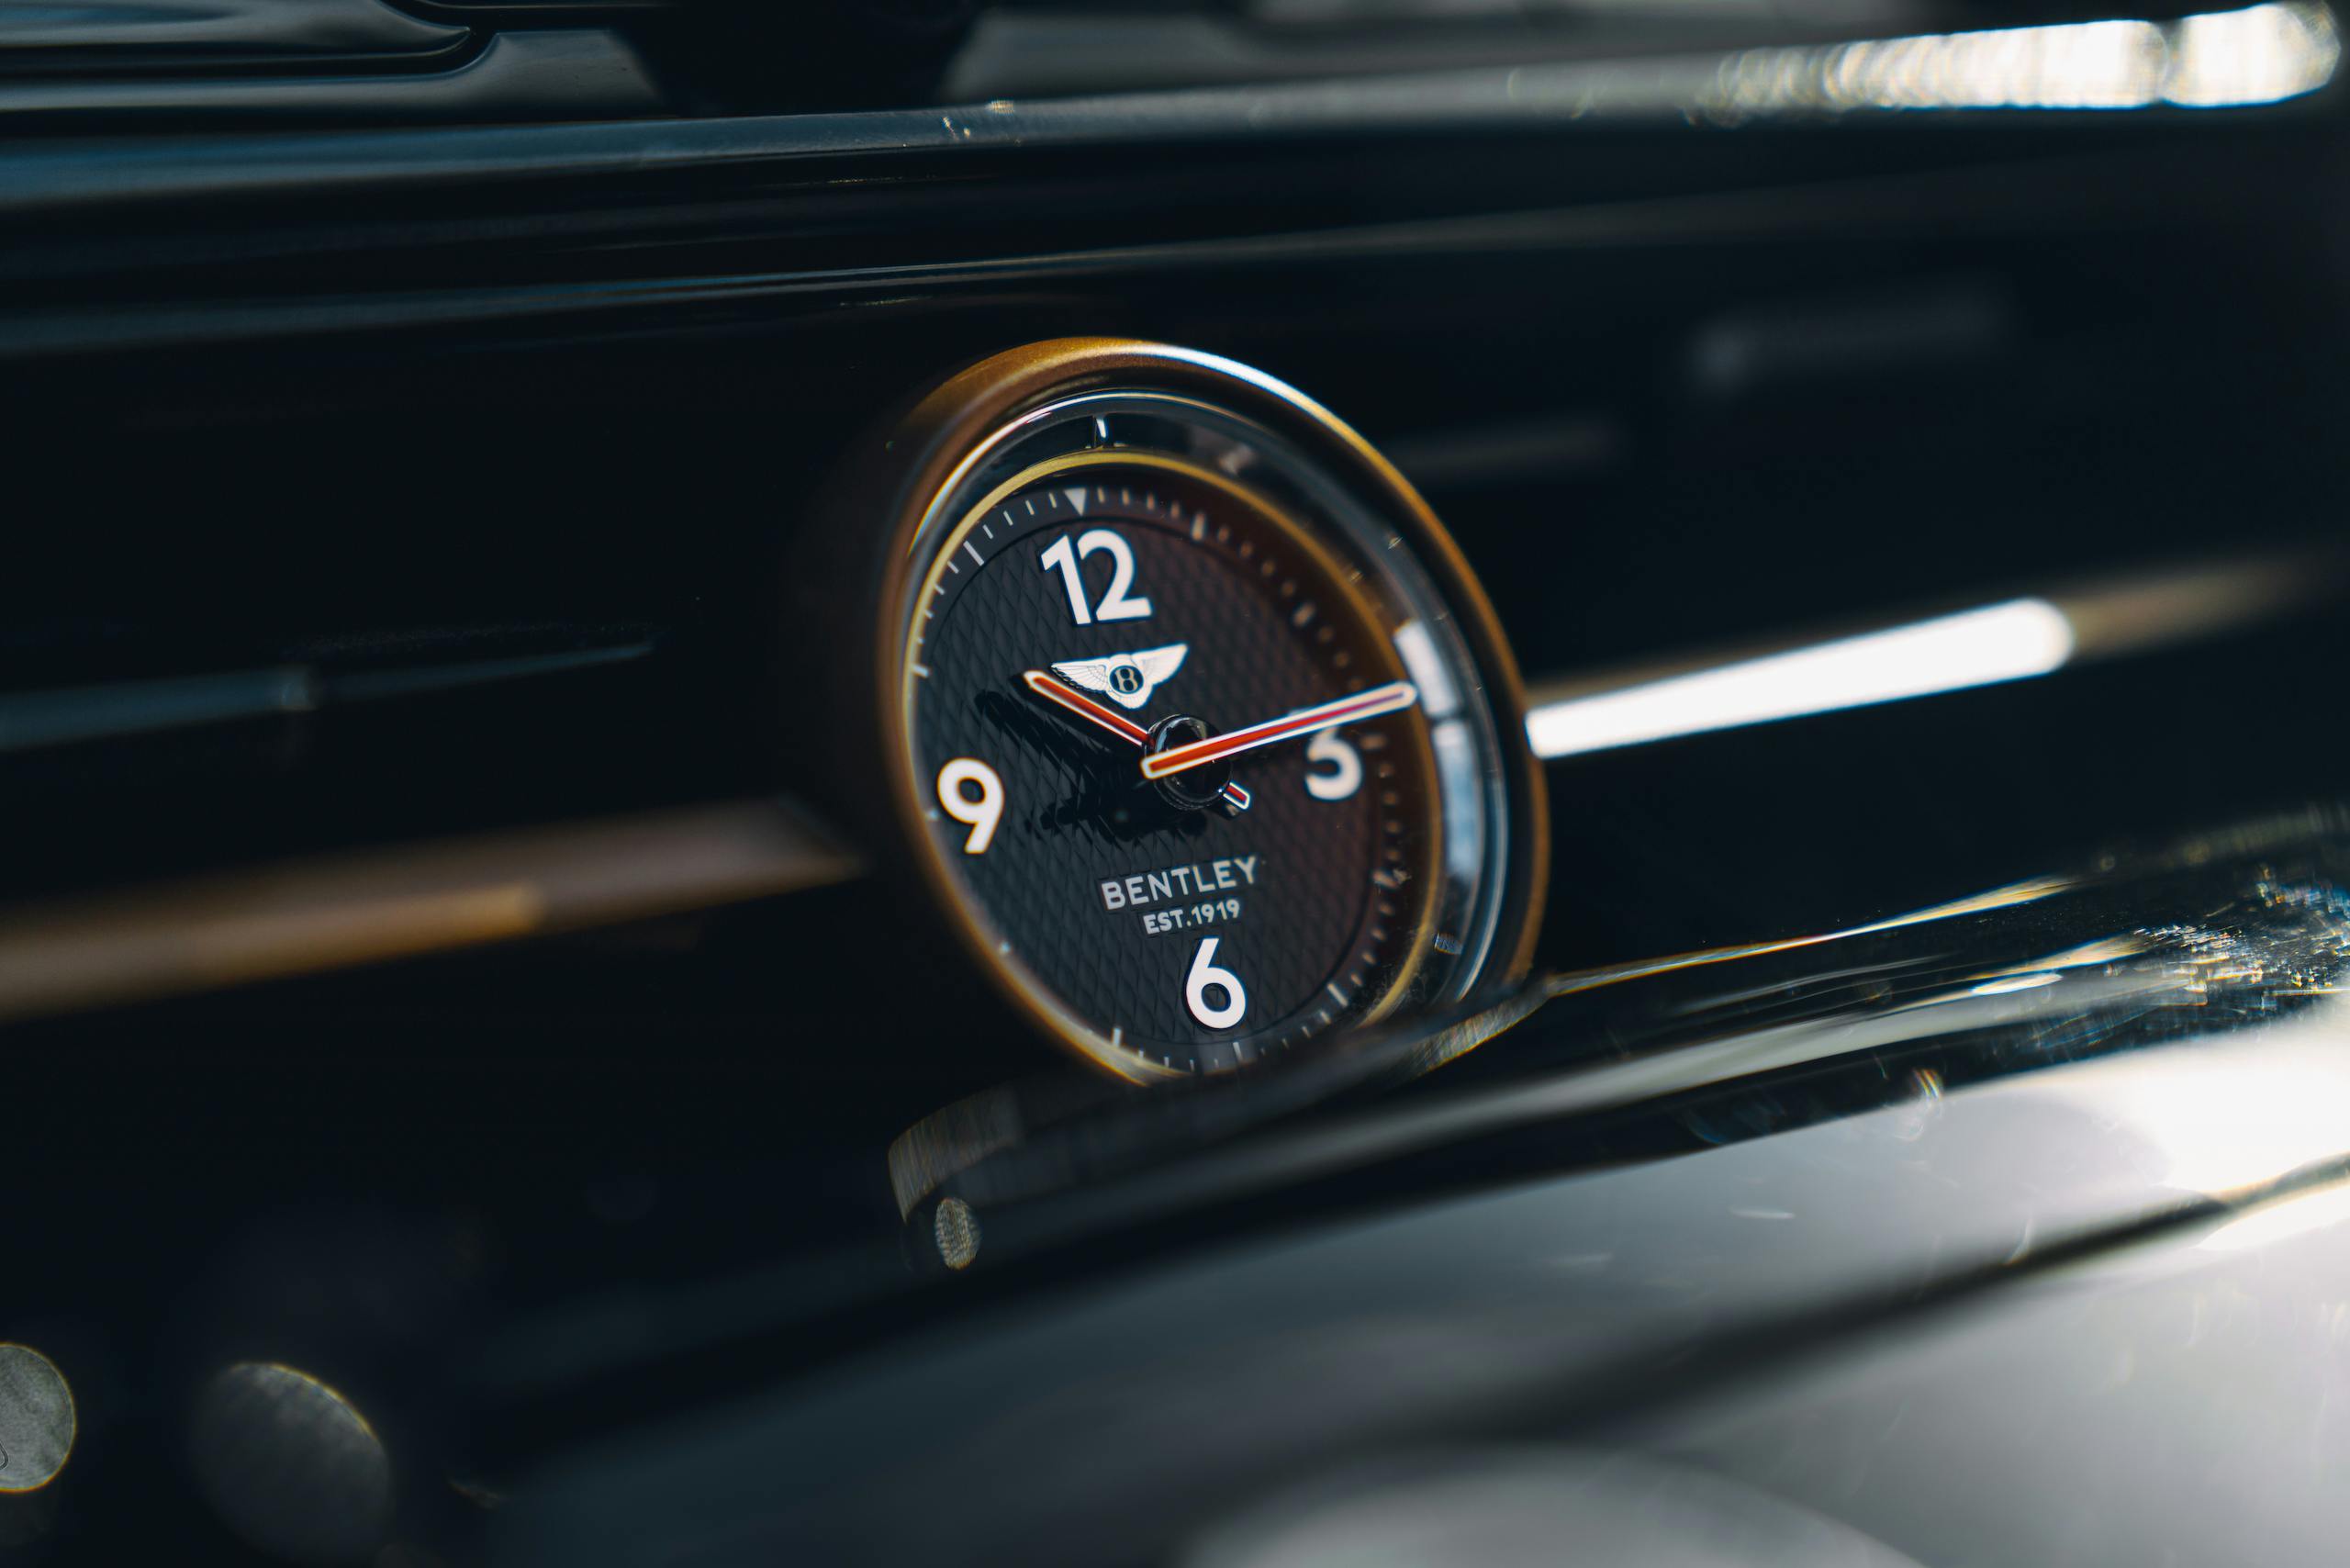 2021 Bentley Bacalar interior clock detail